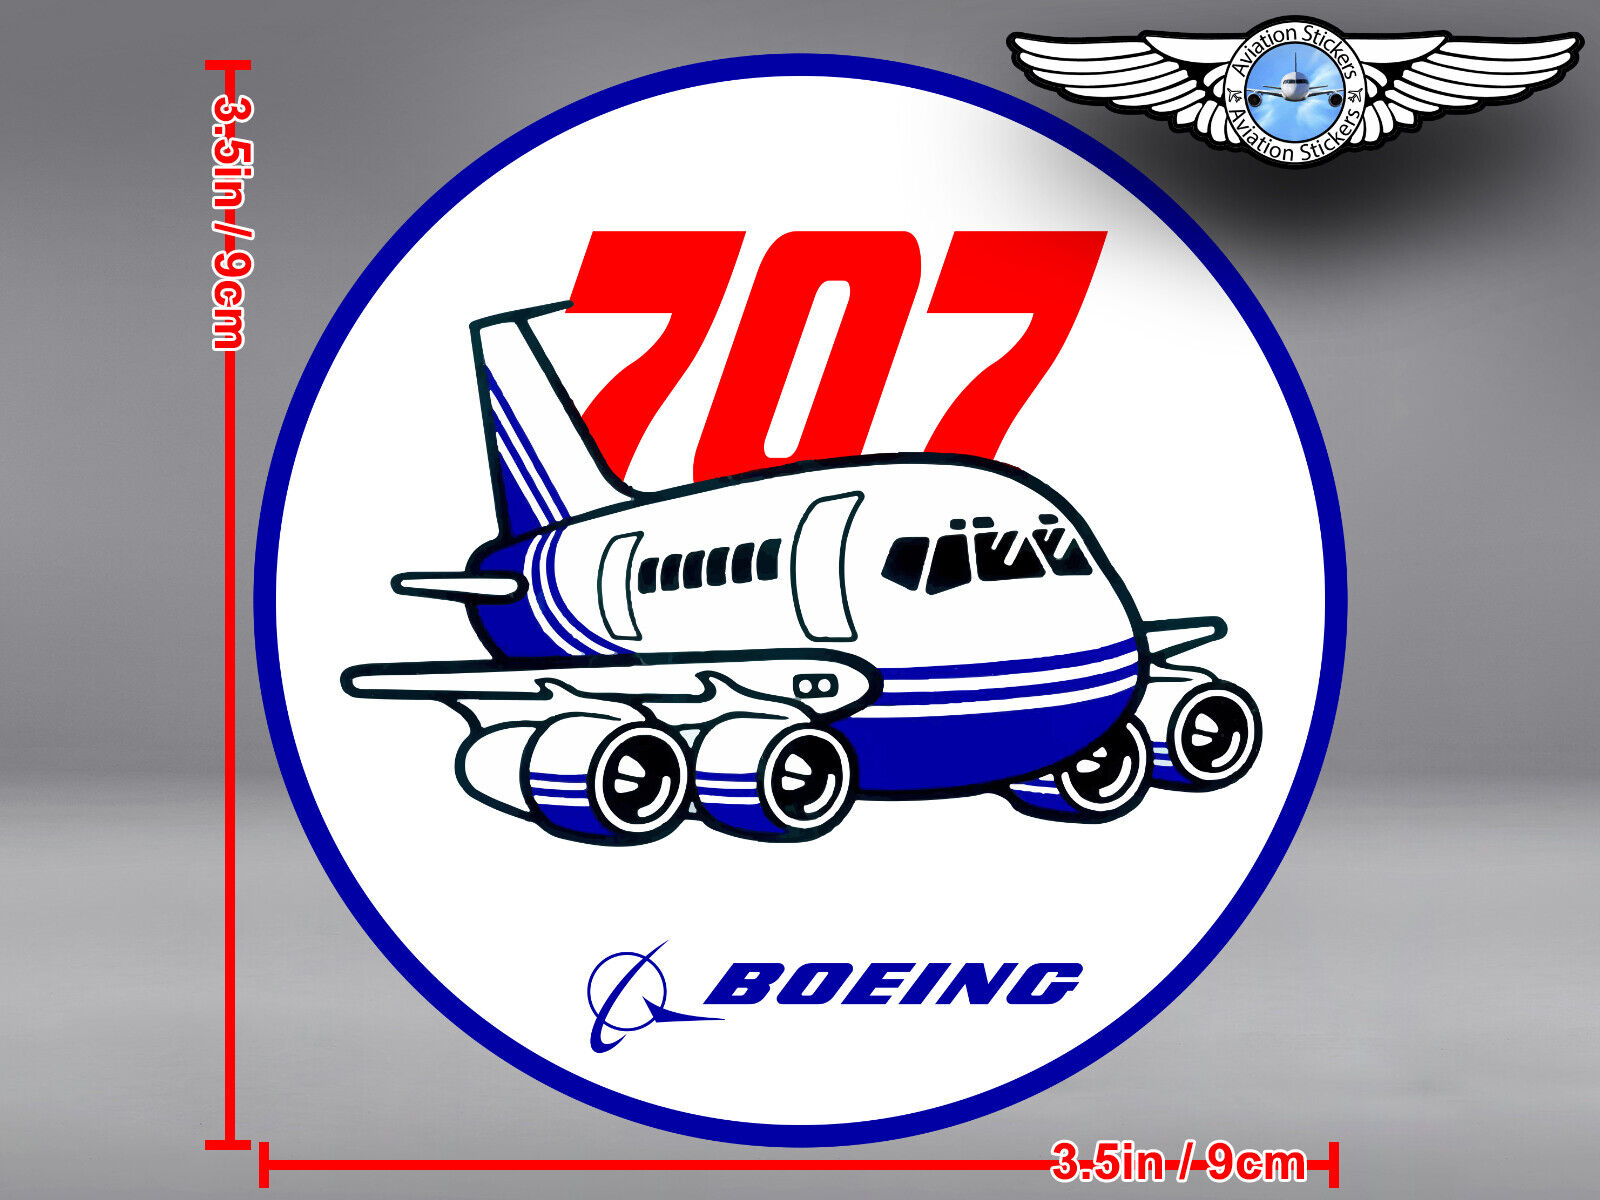 BOEING 707 B707 VINTAGE PUDGY STYLE ROUND DECAL / STICKER